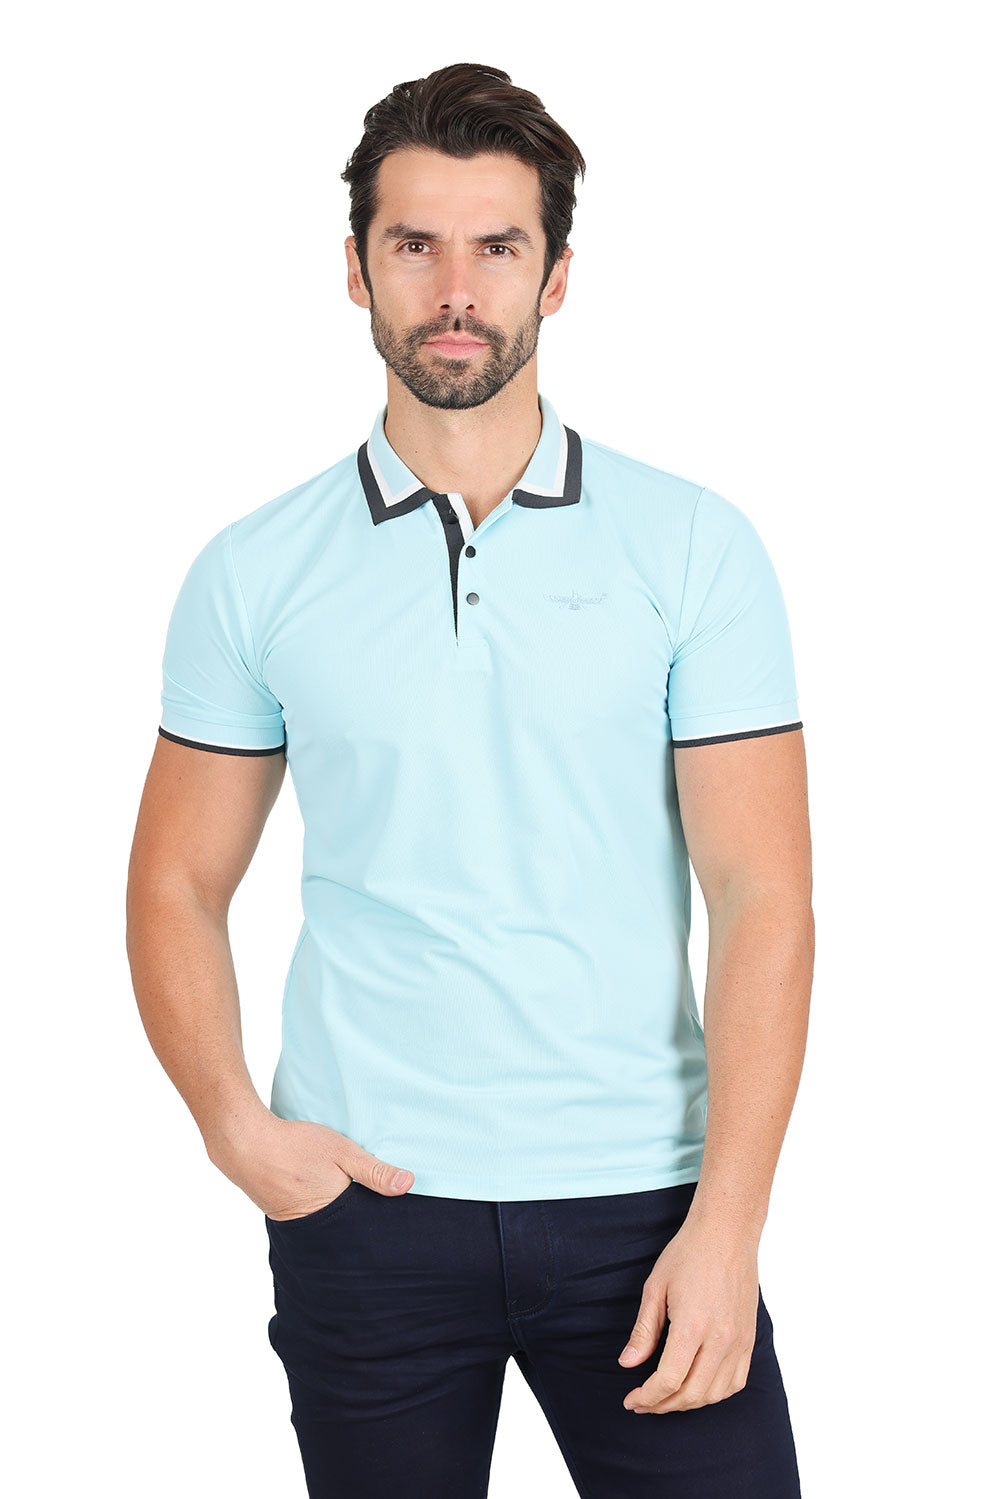 Barabas Men's Solid Color Cotton Short Sleeve Polo Shirts 3PS125 Blue